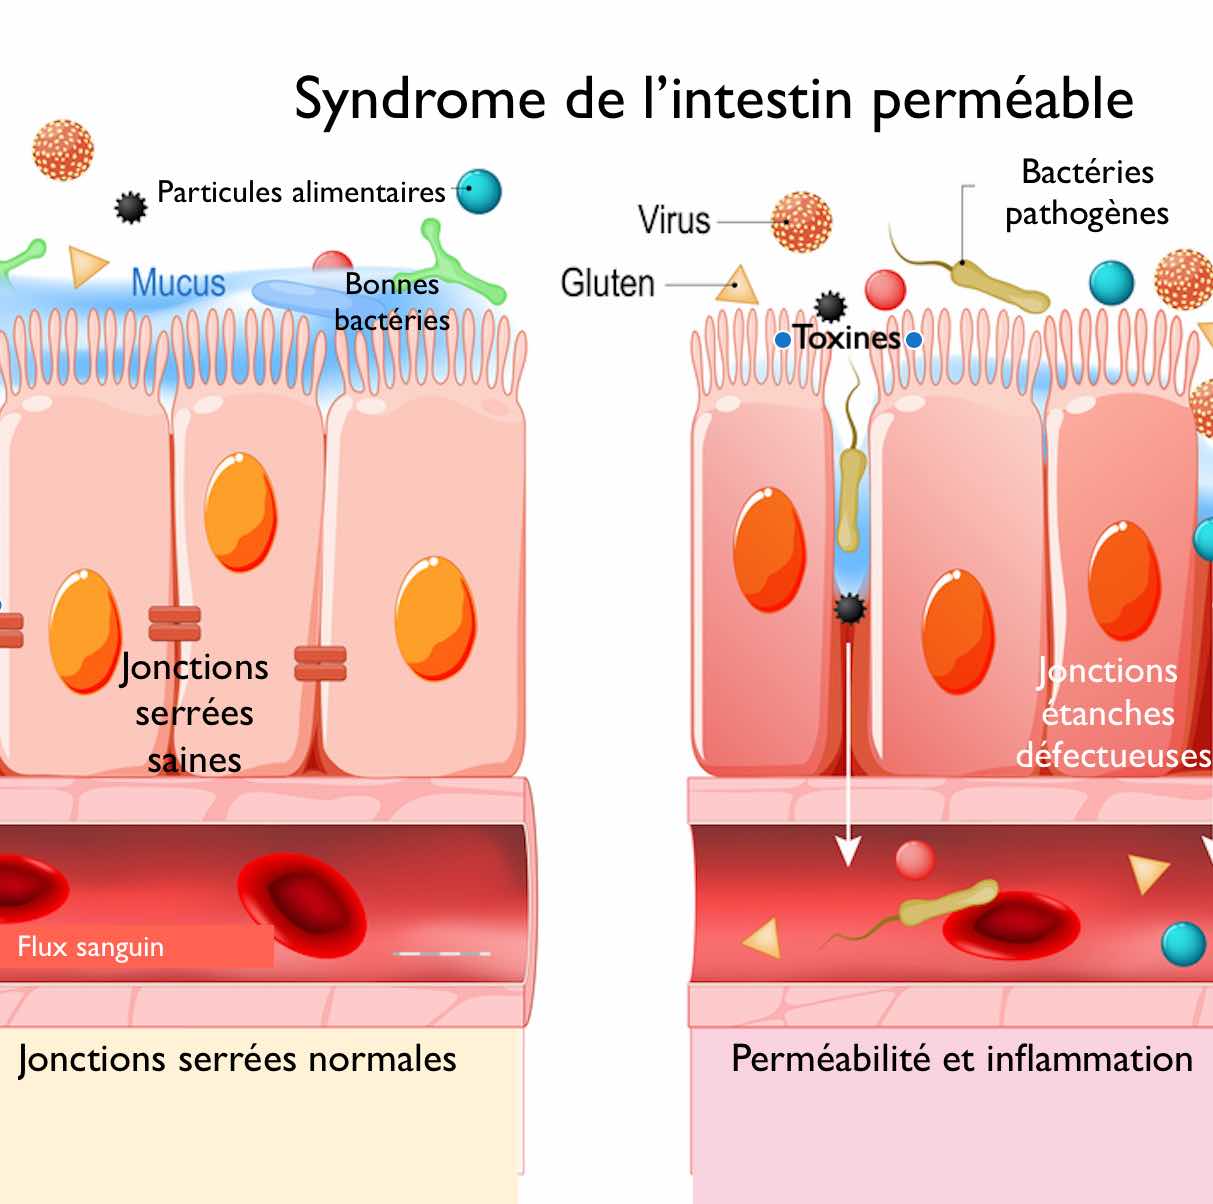 Le syndrome de l'intestin perméable